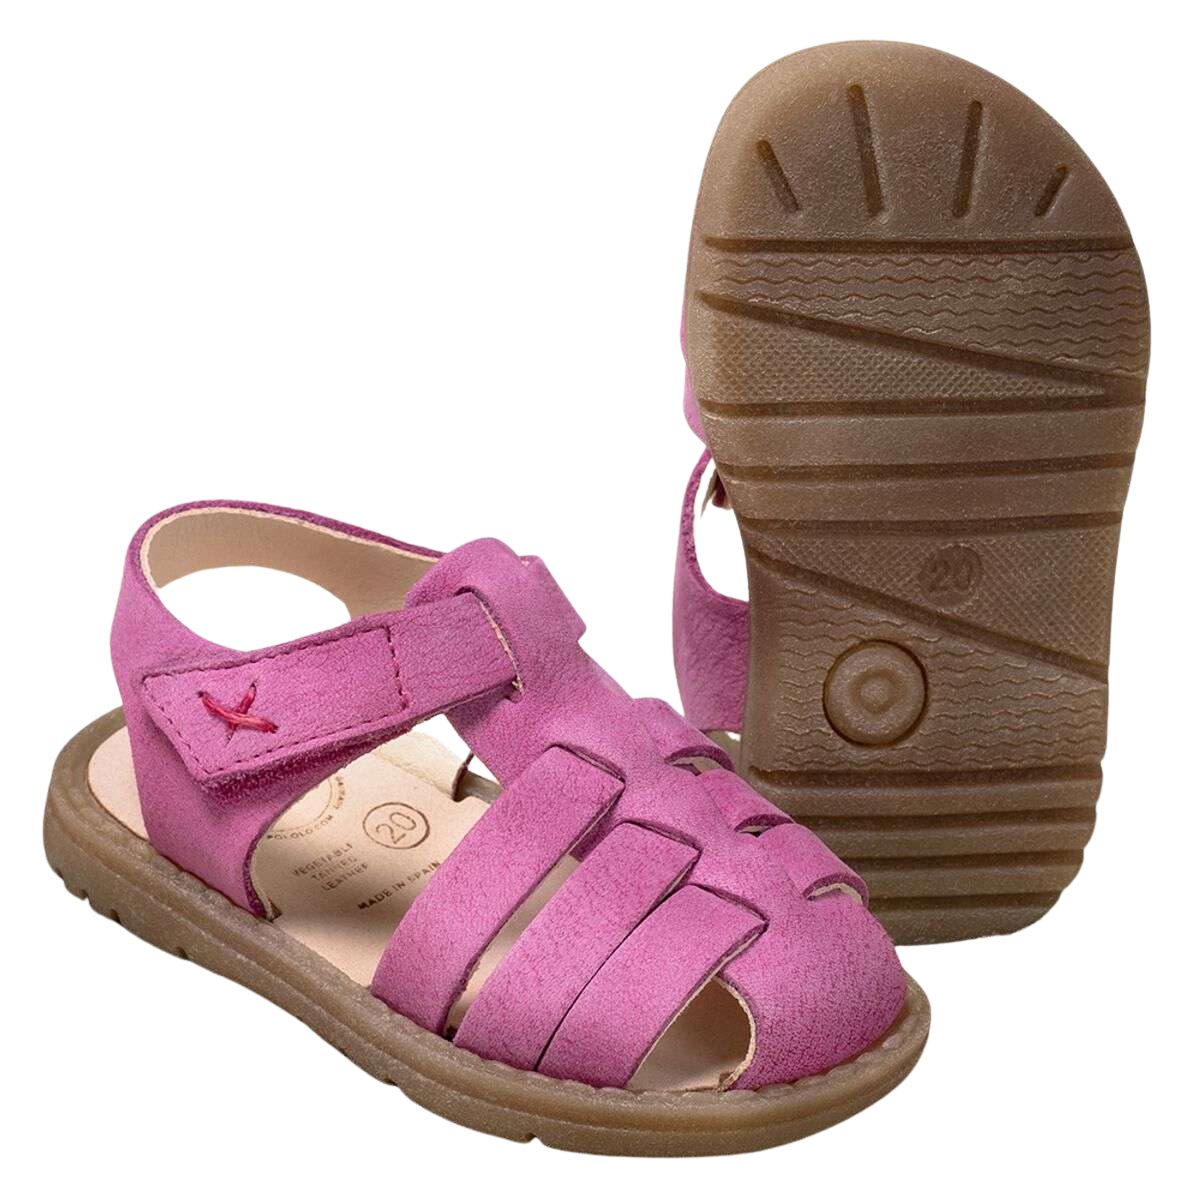 Unisex Sandale Allergikerfreundliche Kinder Kinderschuhe Fiesta, Pink POLOLO Kinderscchuhe